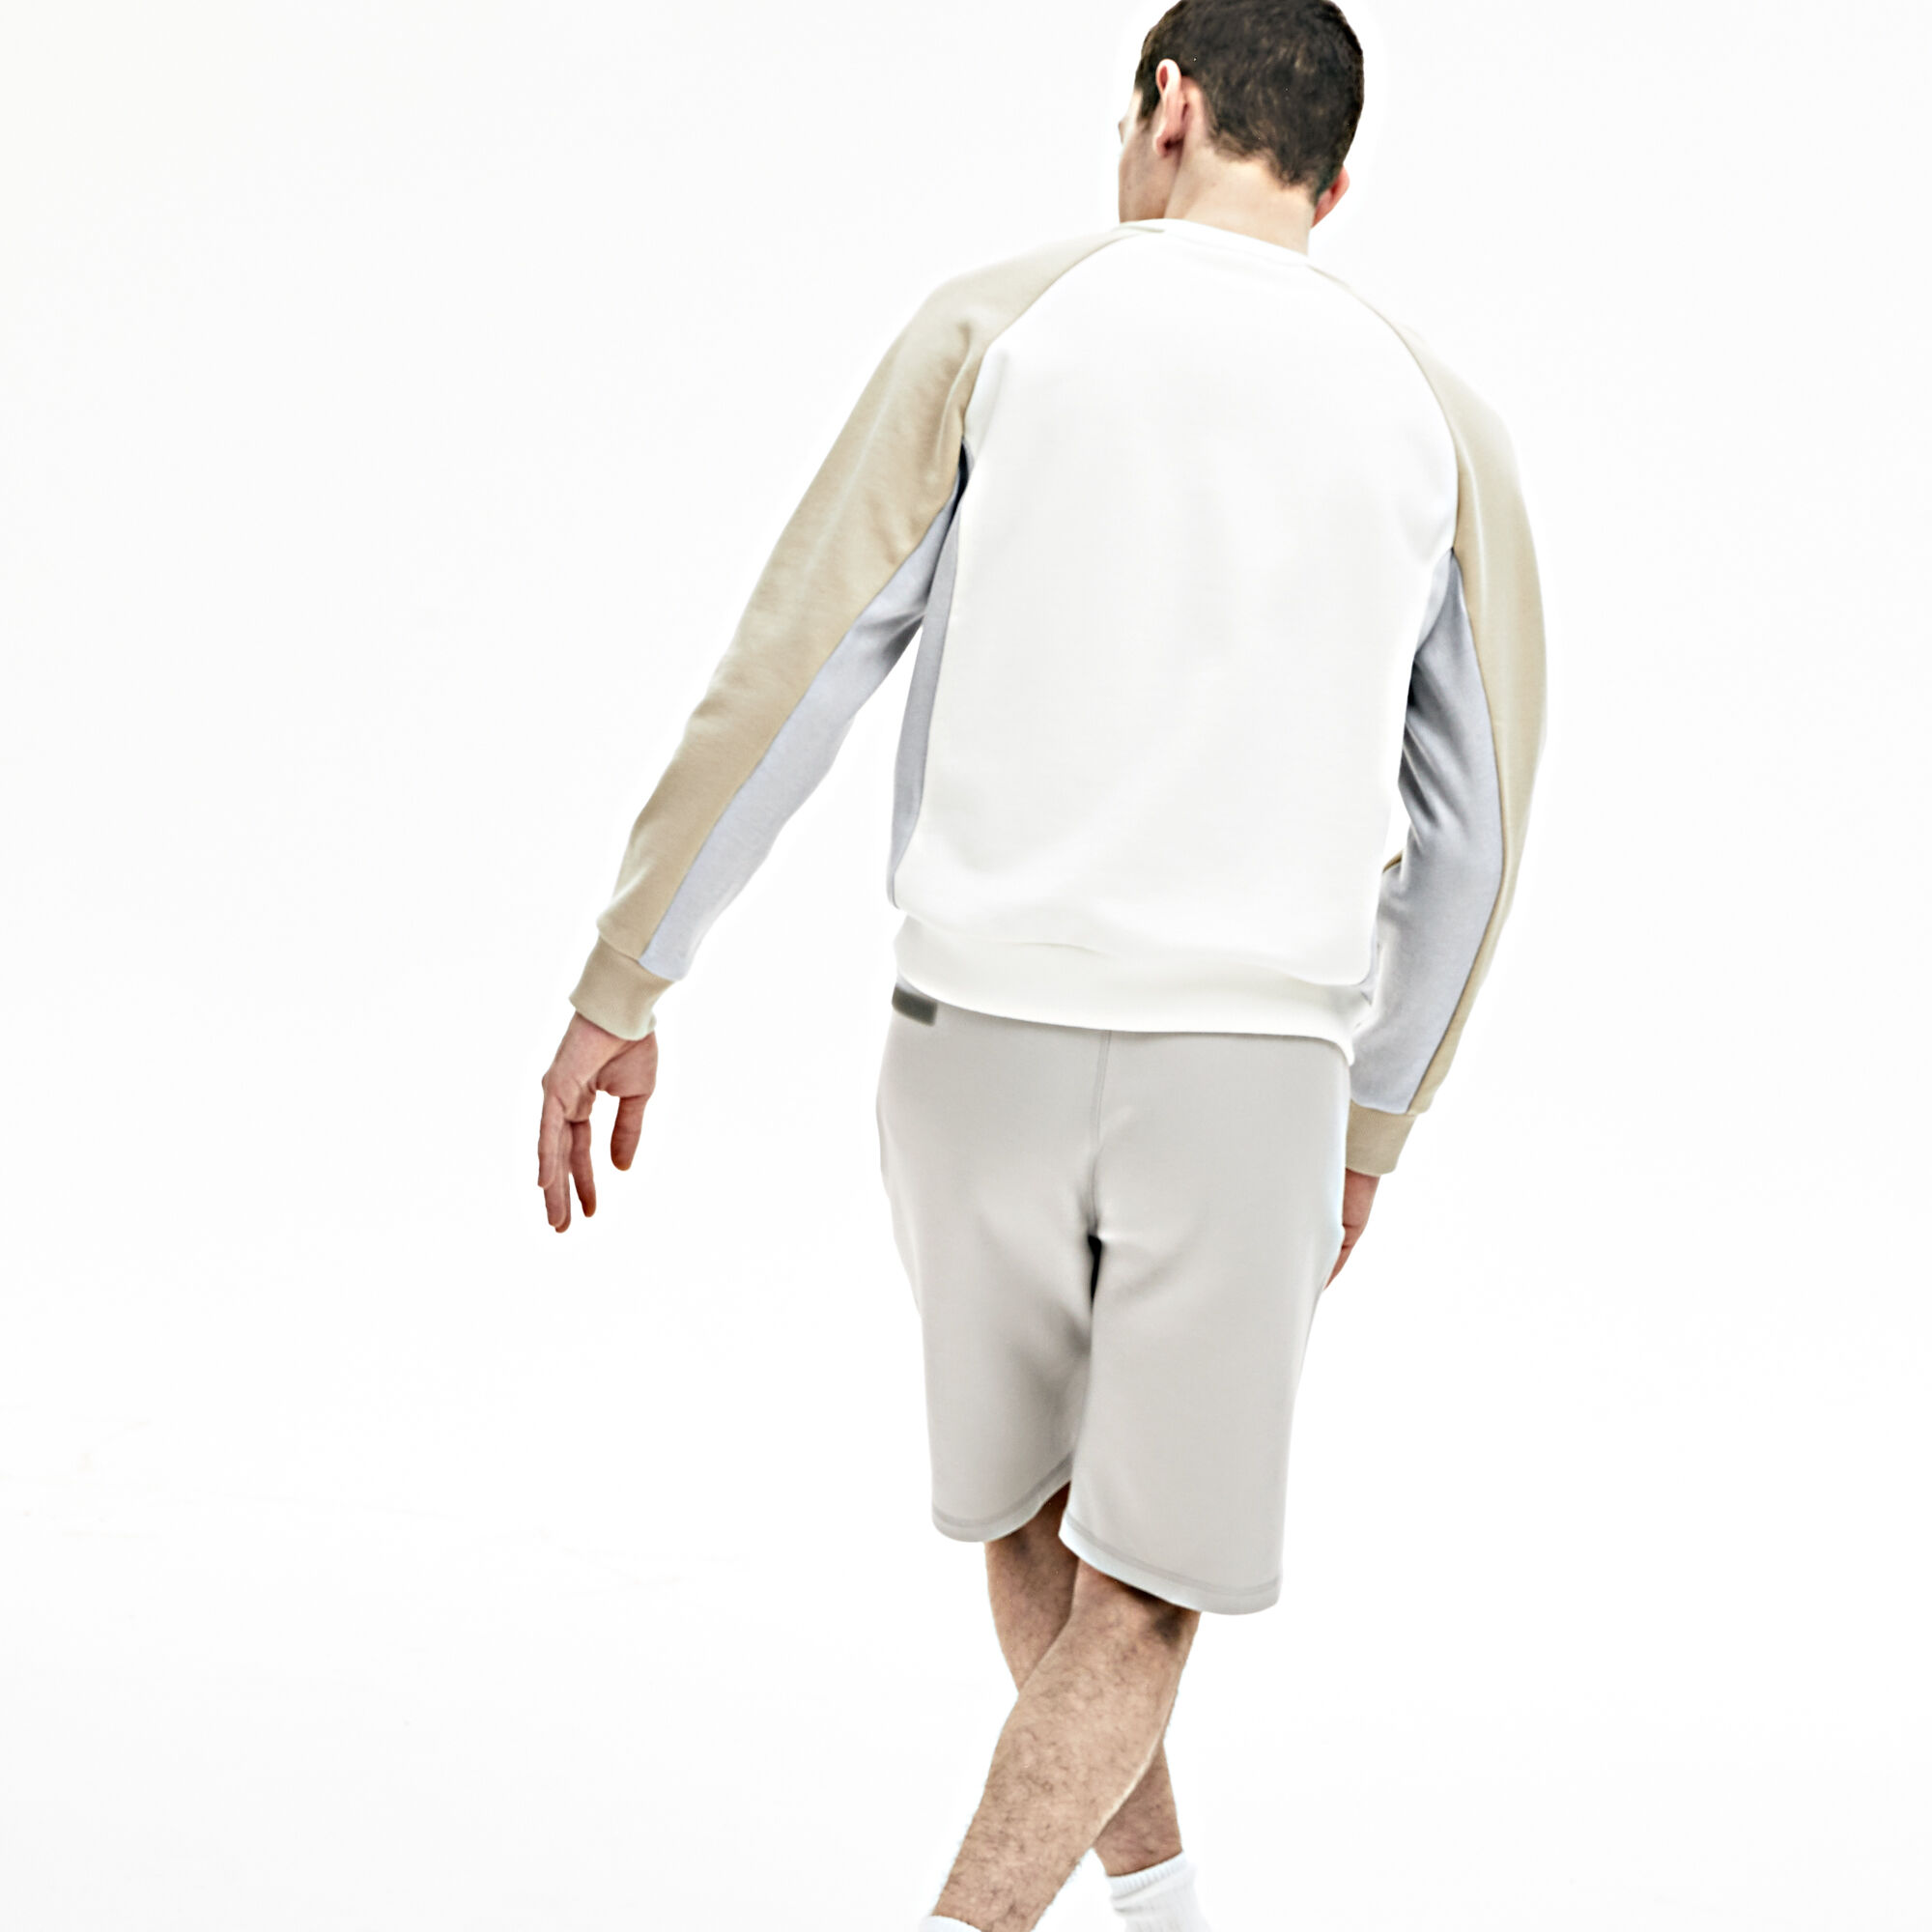 Men's Lacoste Motion Stretch Cotton Bermuda Shorts